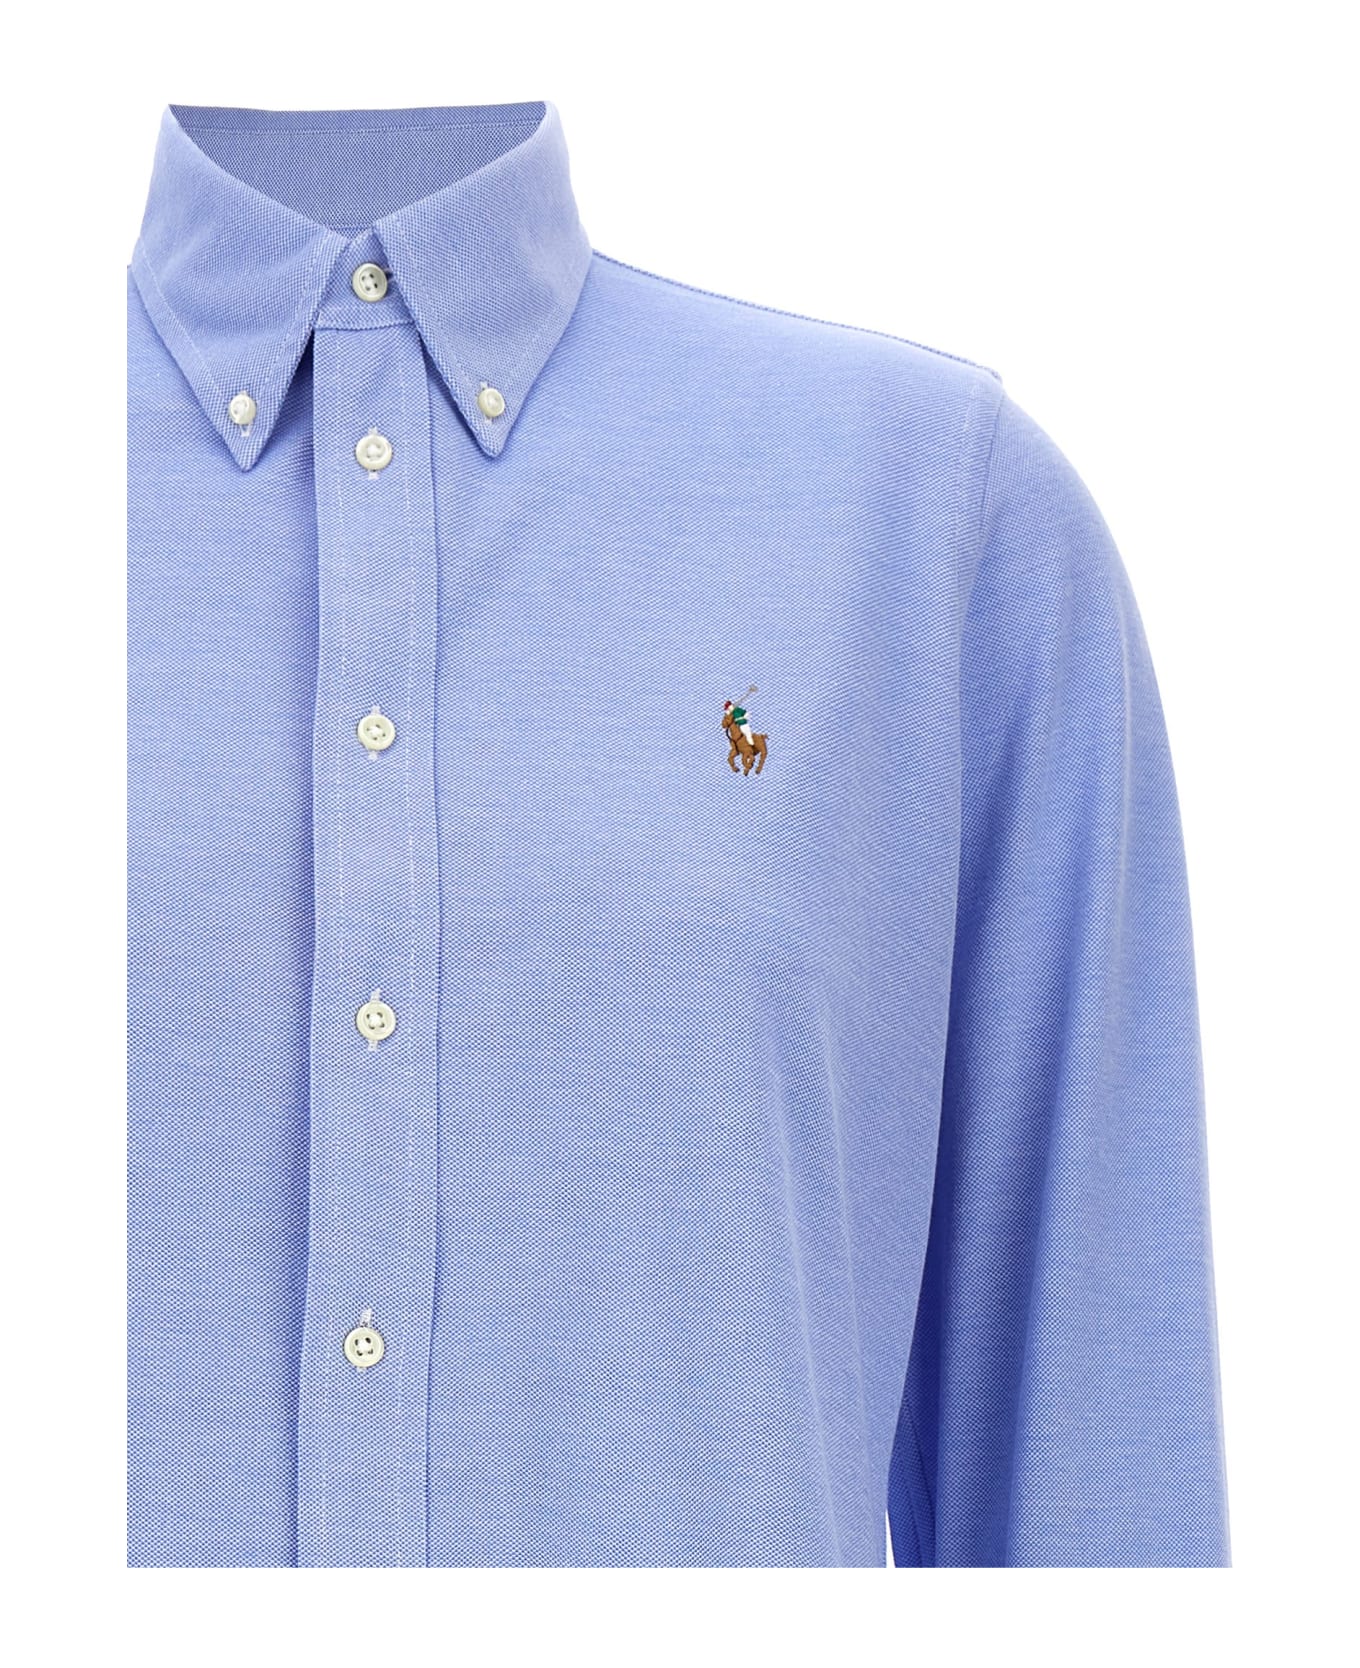 Ralph Lauren 'heidi' Shirt - Harbour Island Blue